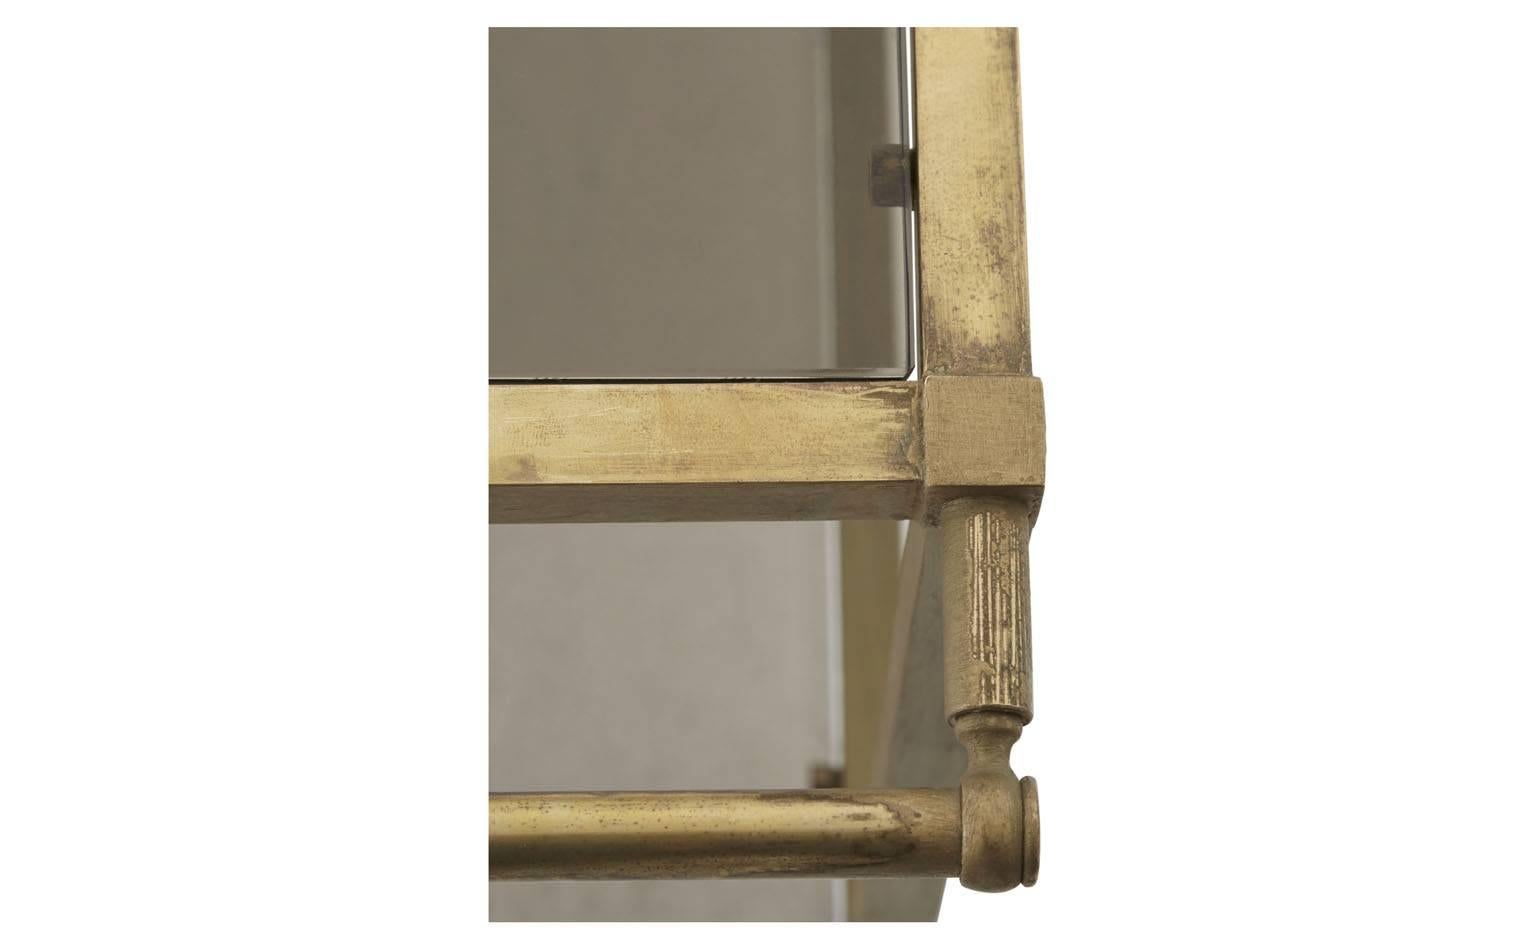 • Brass frame
• Smoked glass
• Brass casters
• 20th century
• Spanish
• Measure: 16.5 D x 29.25 W x 24.25 H. 


